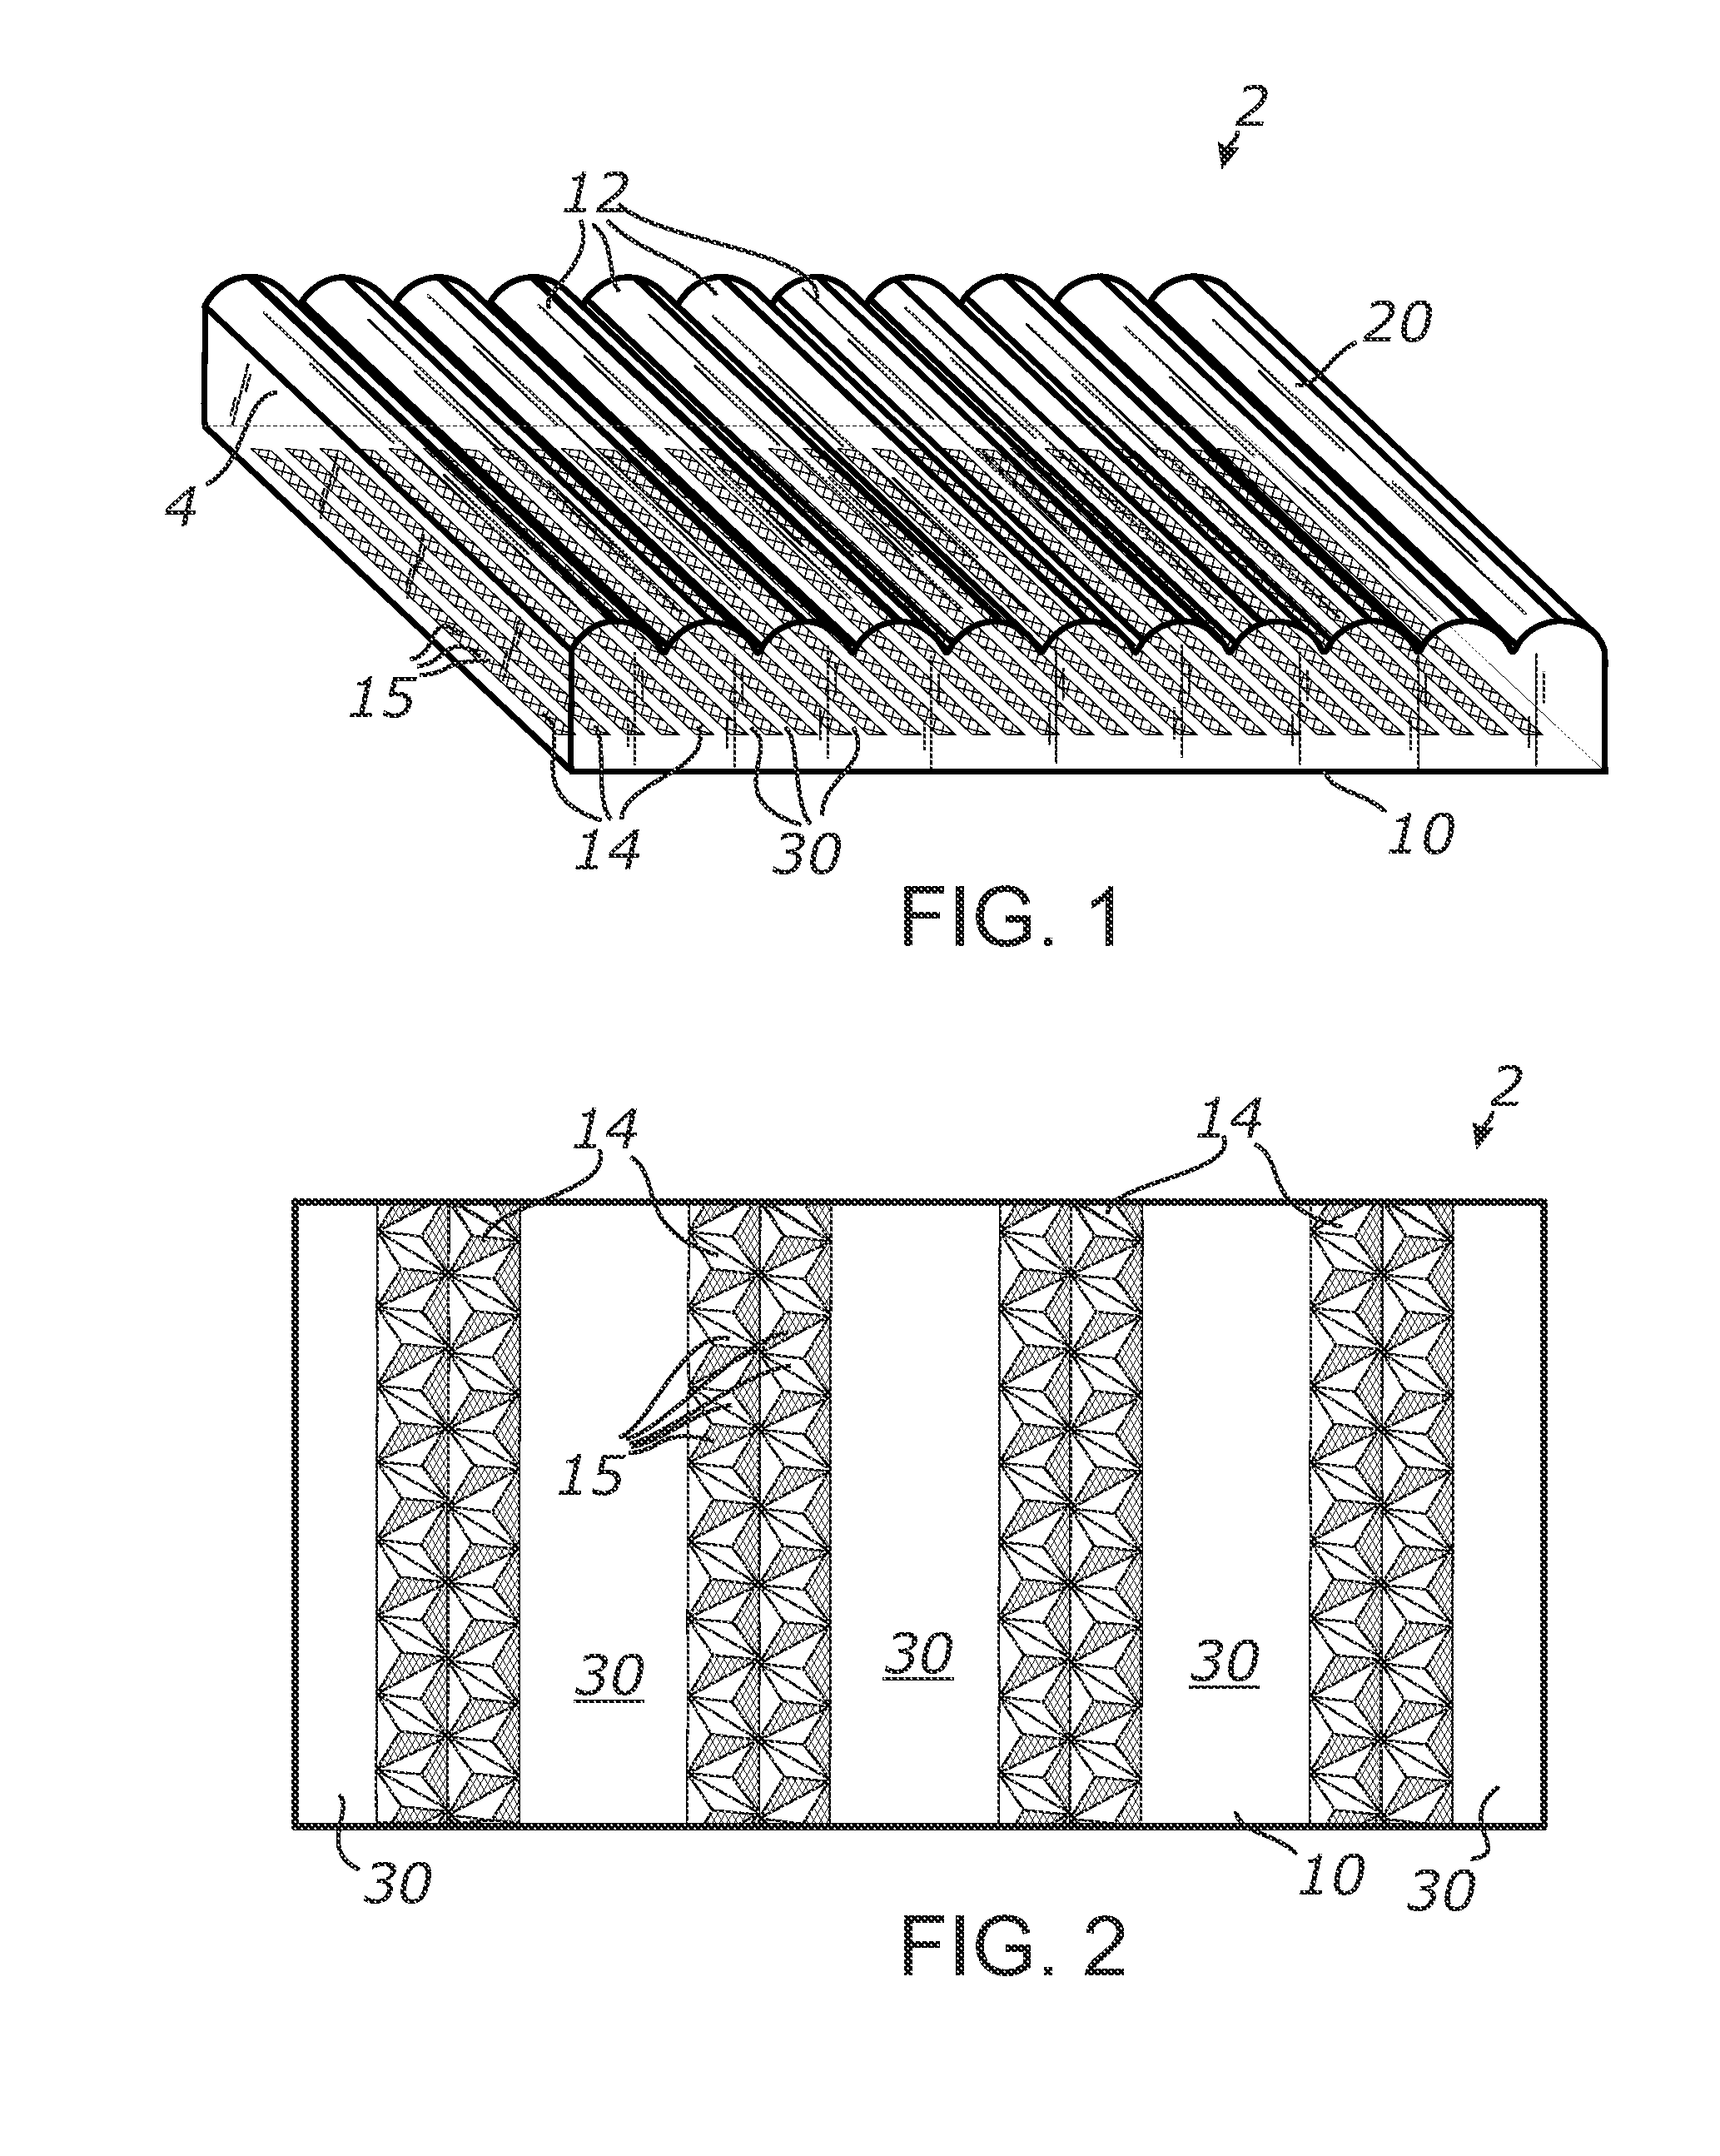 Retroreflective lenticular arrays